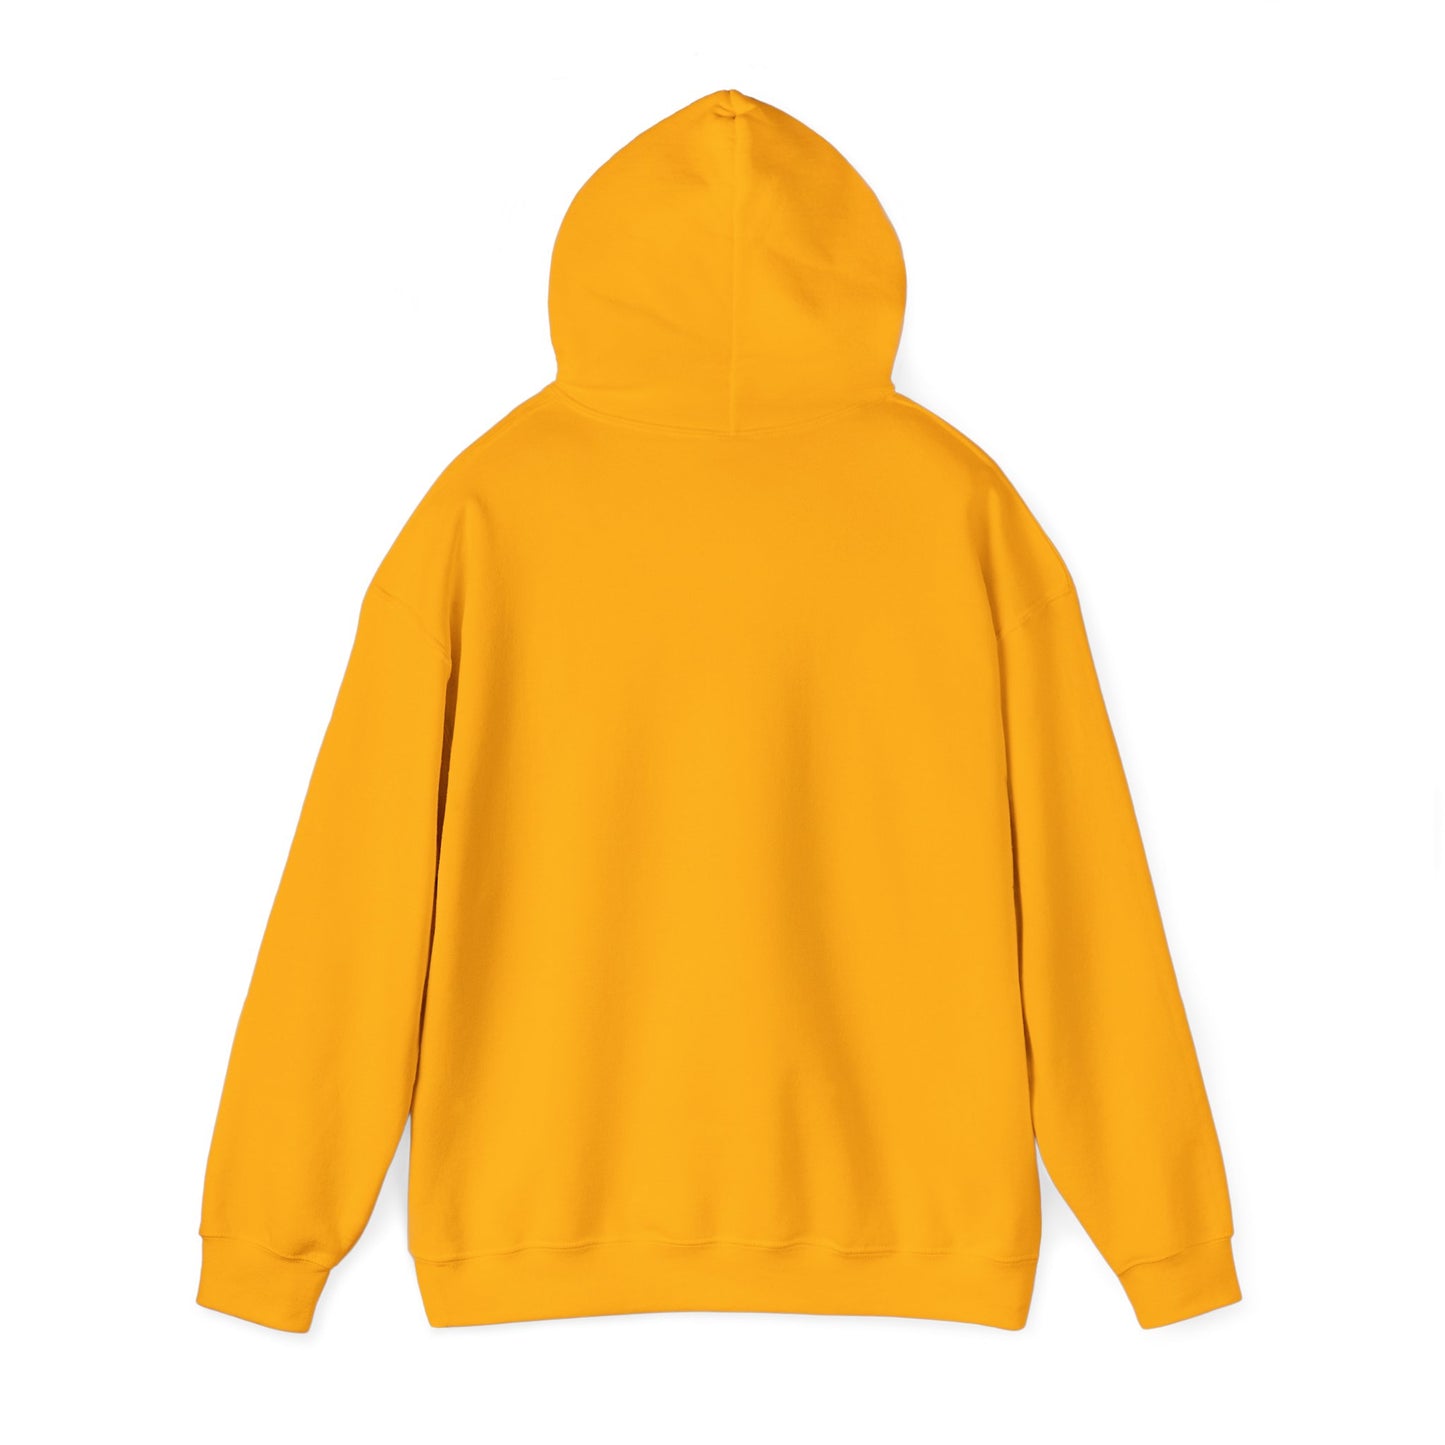 CyVision Virgos VS Everybody Unisex Heavy Blend™ Hooded Sweatshirt